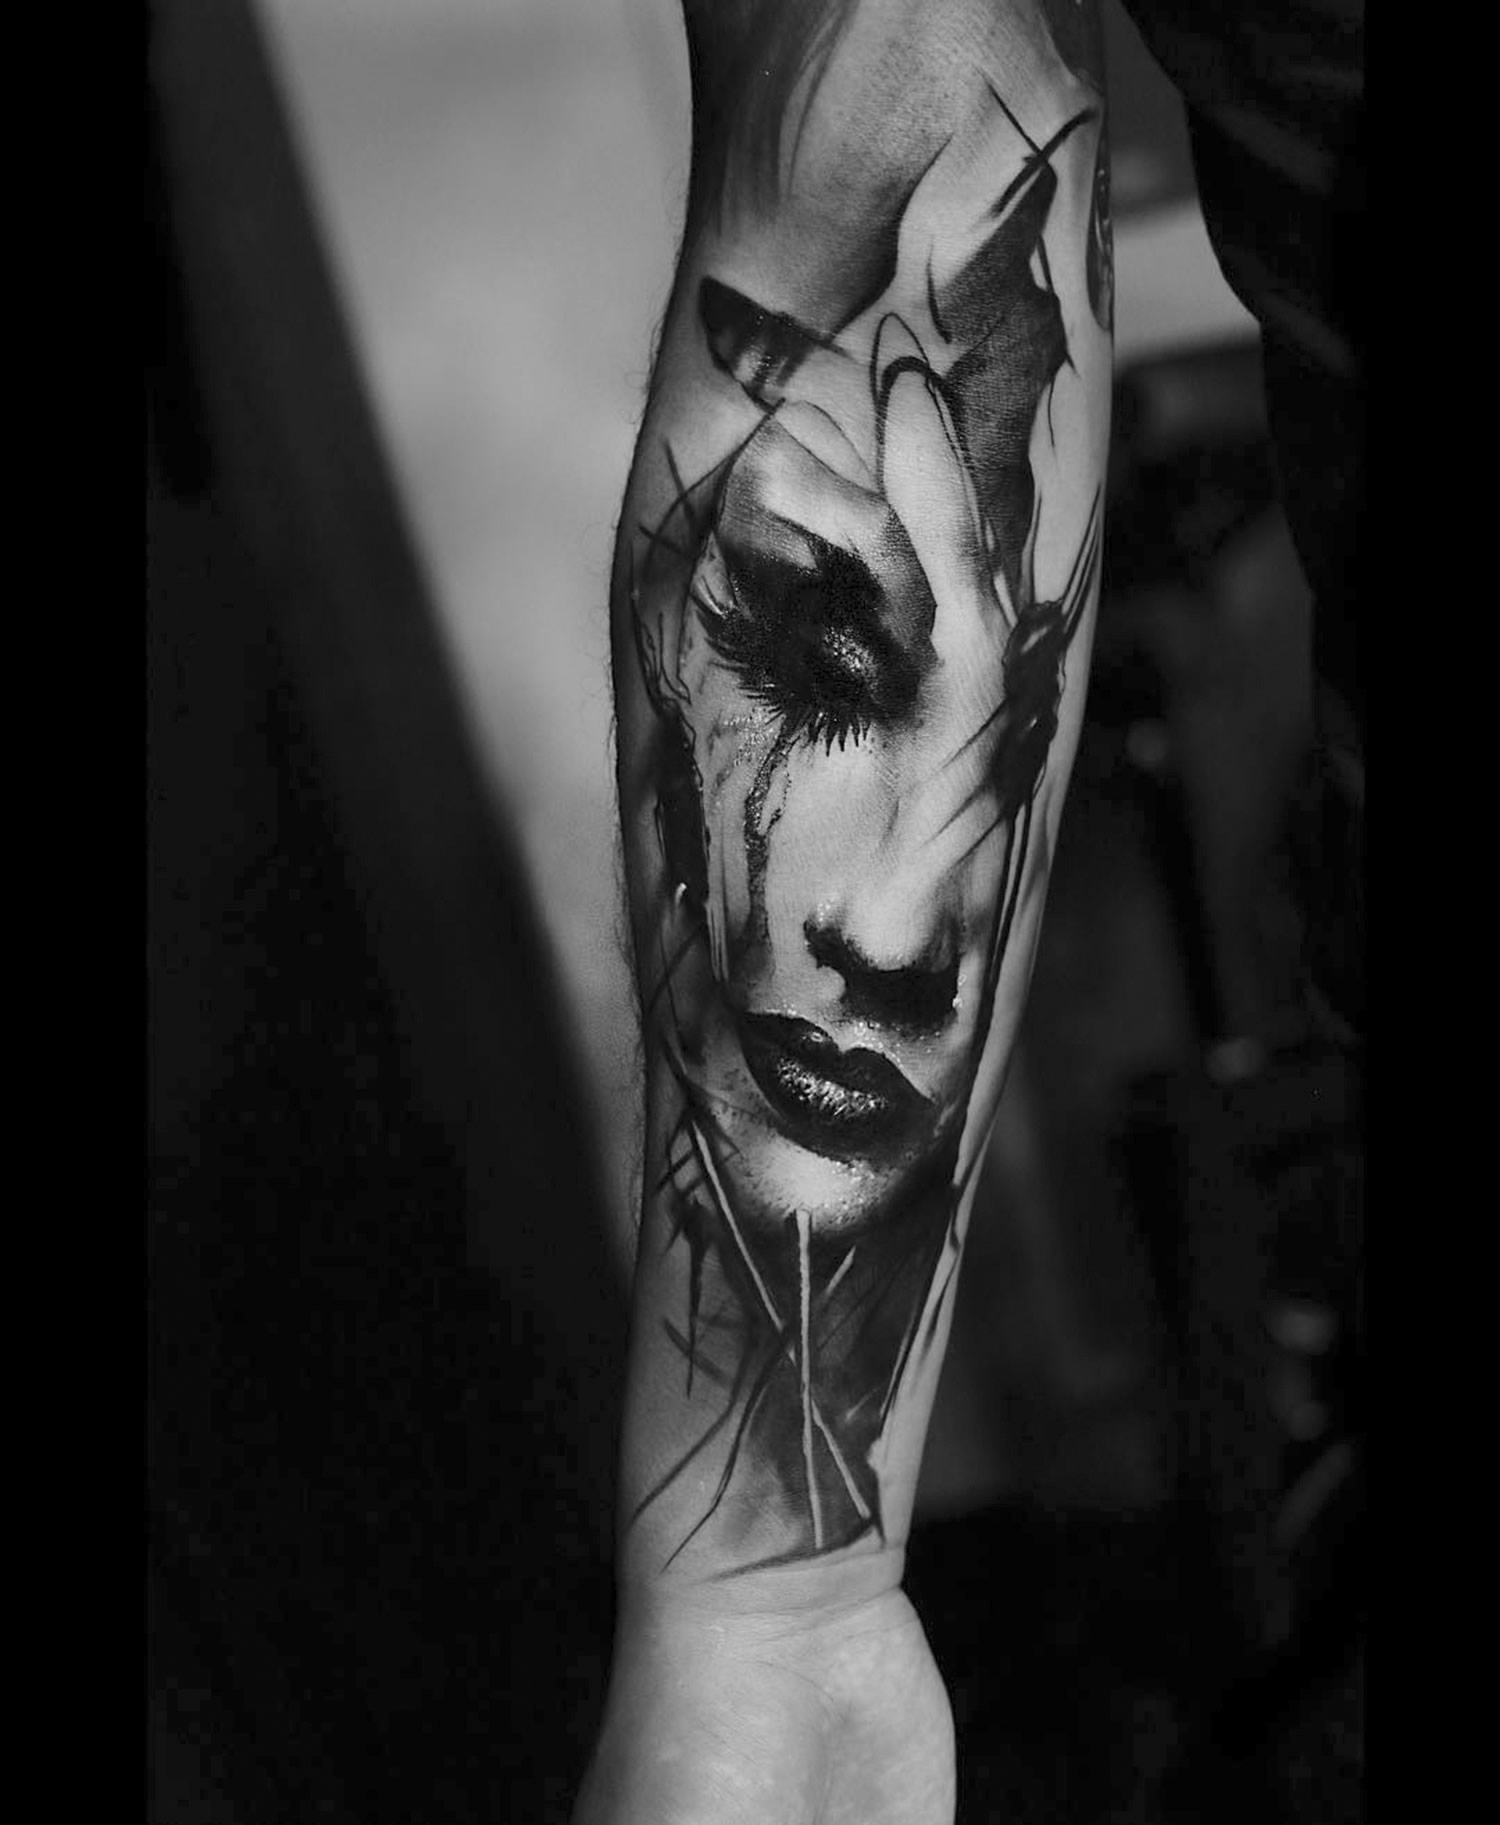 tattooed portrait on arm by kurt staudinger